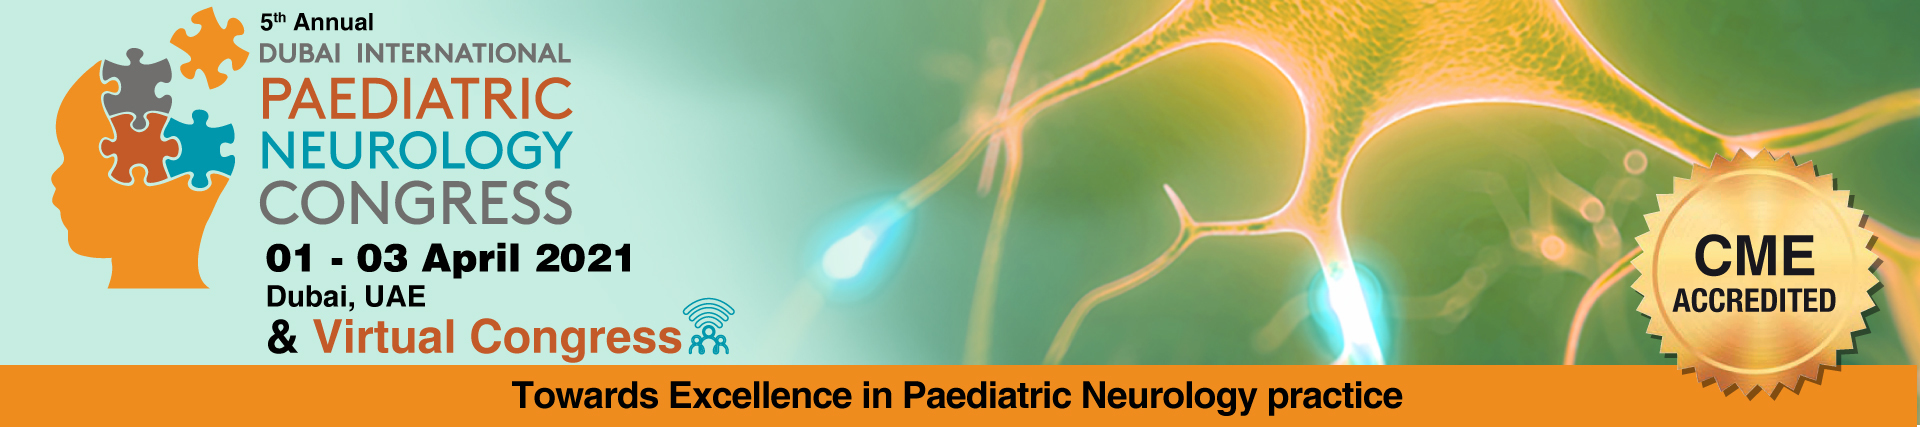 5th Annual Dubai International Paediatric Neurology Conference, Online, United Arab Emirates